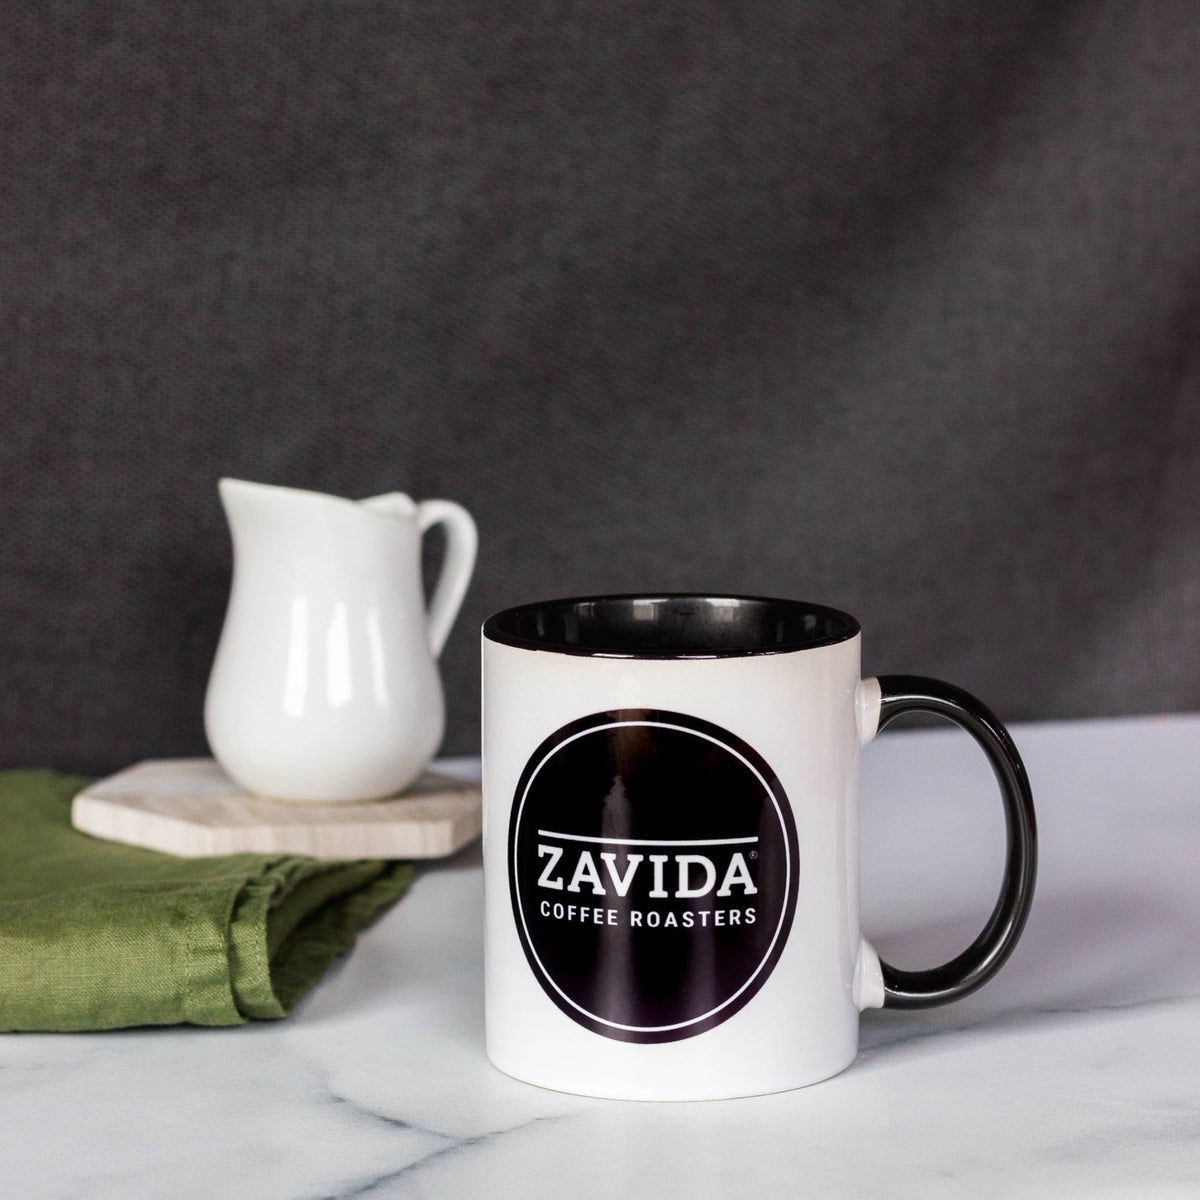 Zavida Coffee Roasters white coffee mug with a black logo in a kitchen setting